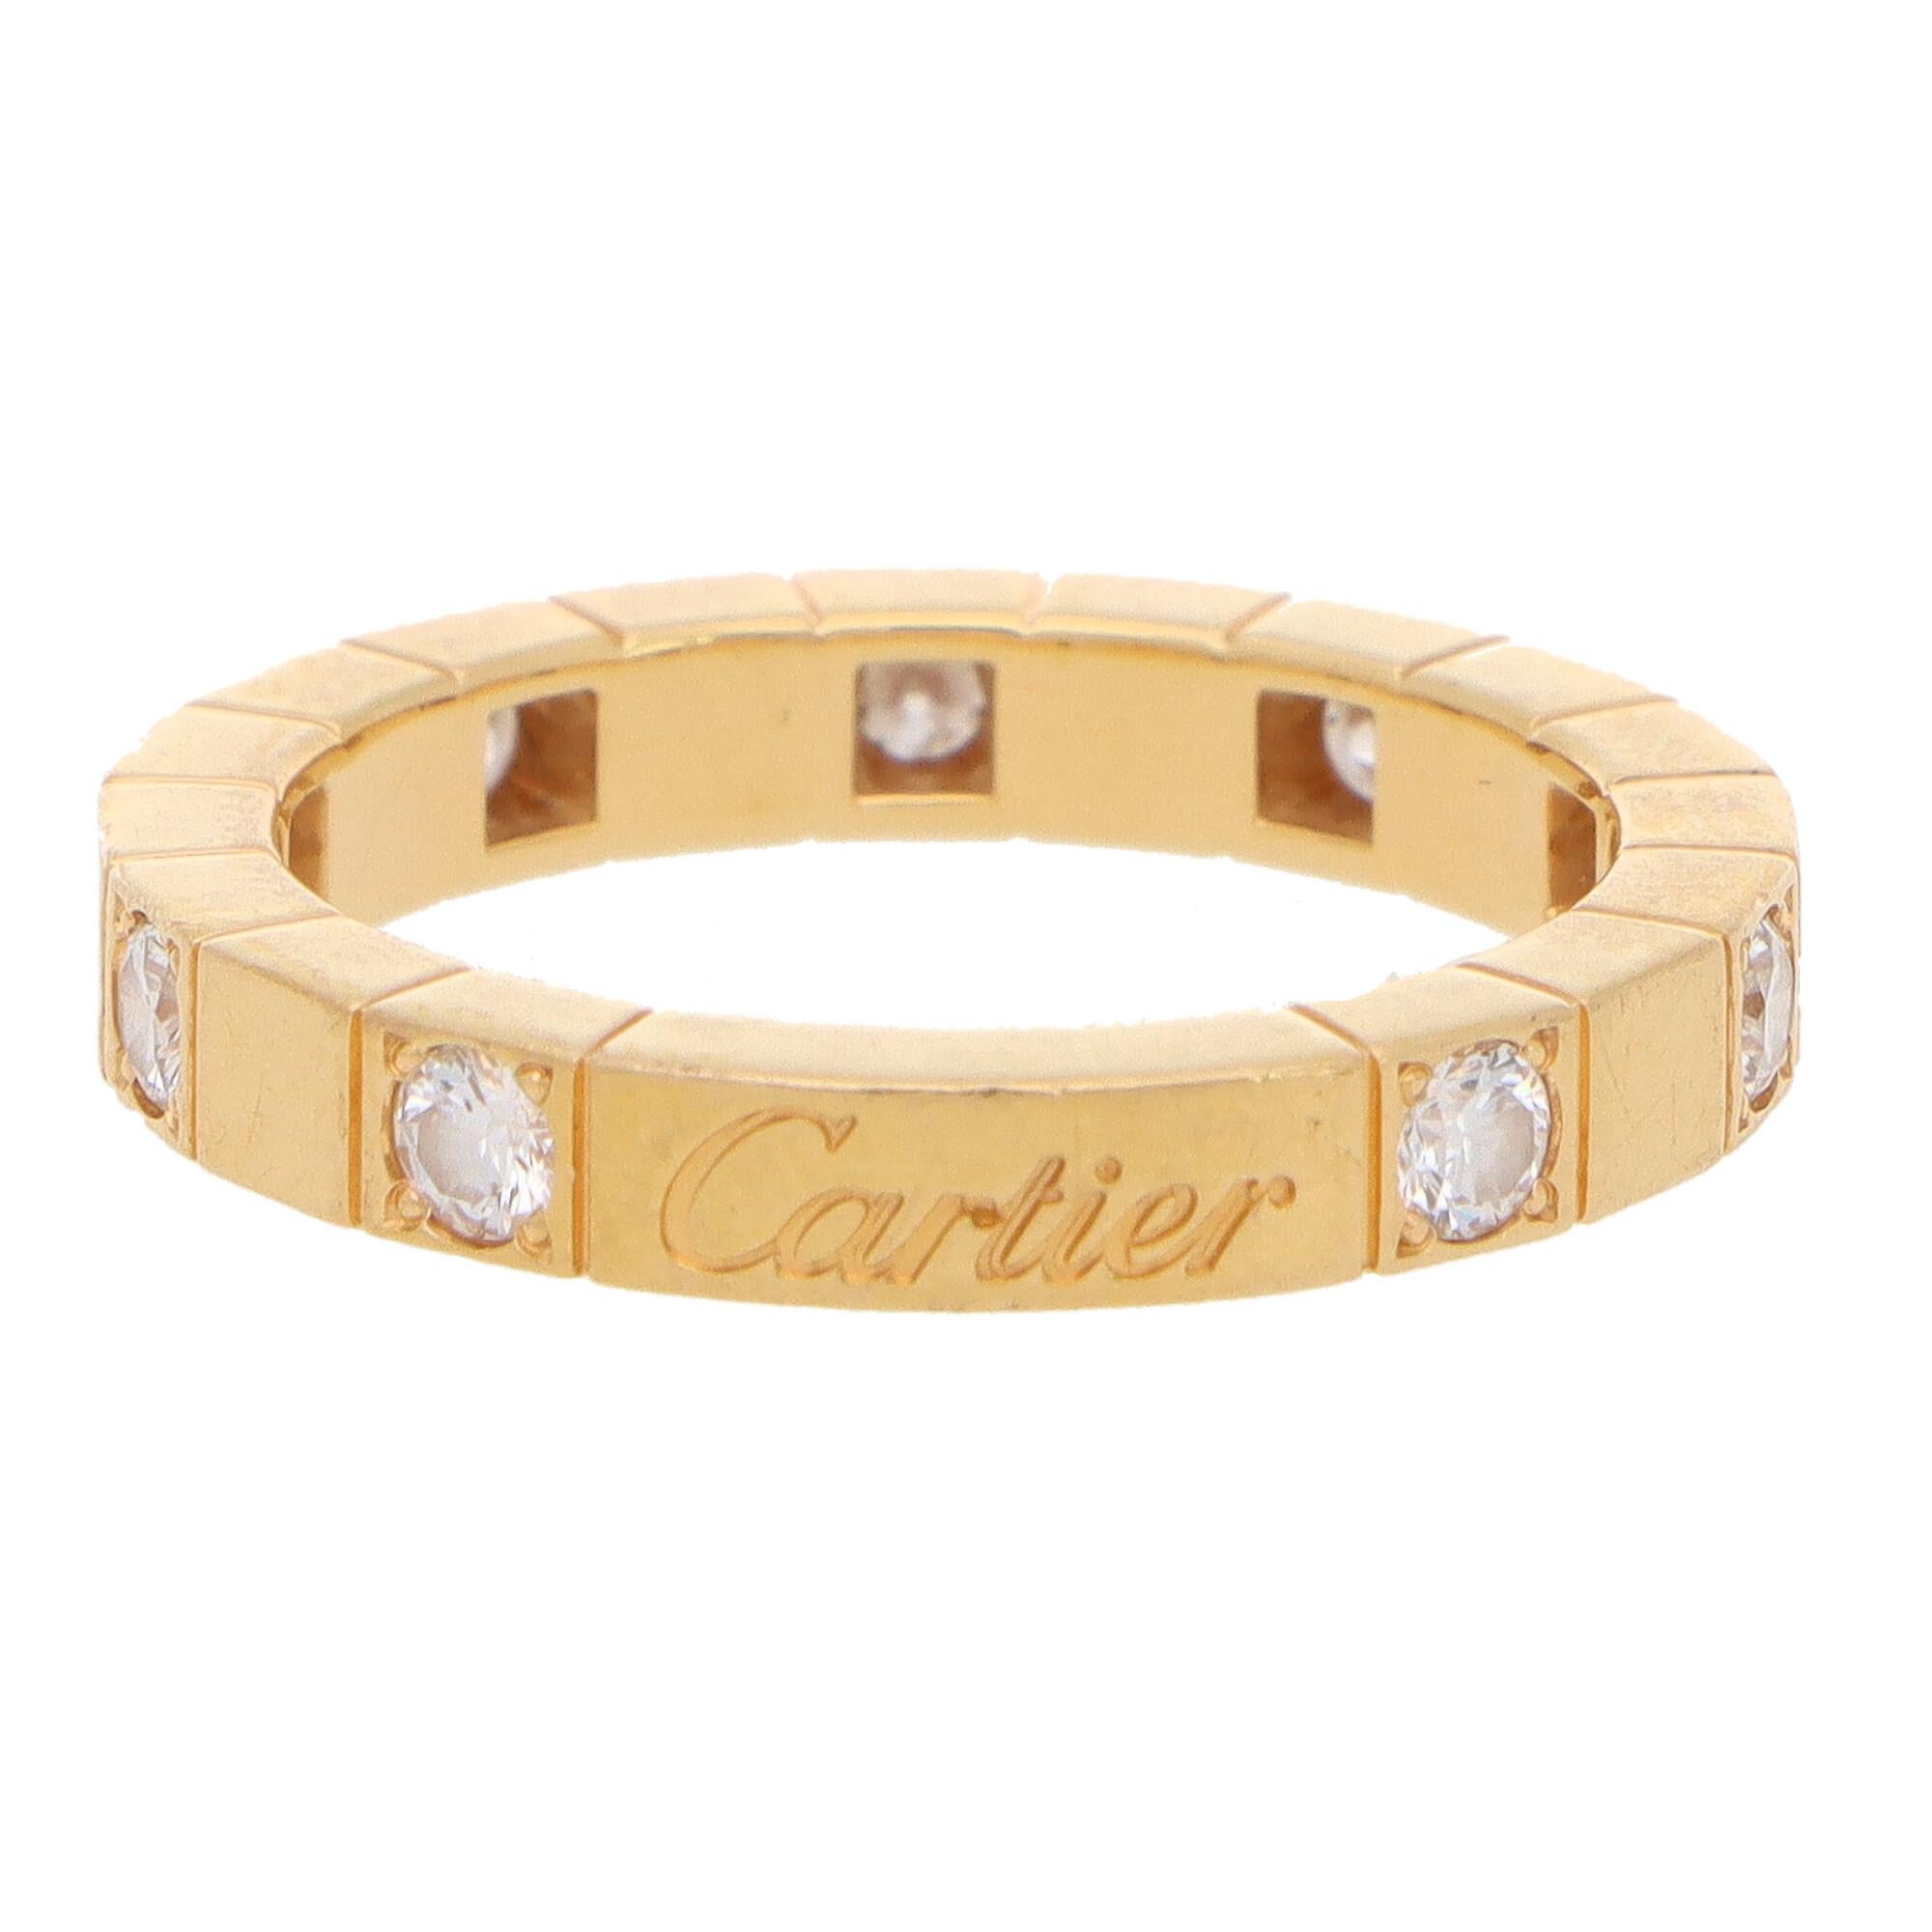 Modern Vintage Cartier Lanières Diamond Eternity Band Ring Set in 18k Yellow Gold